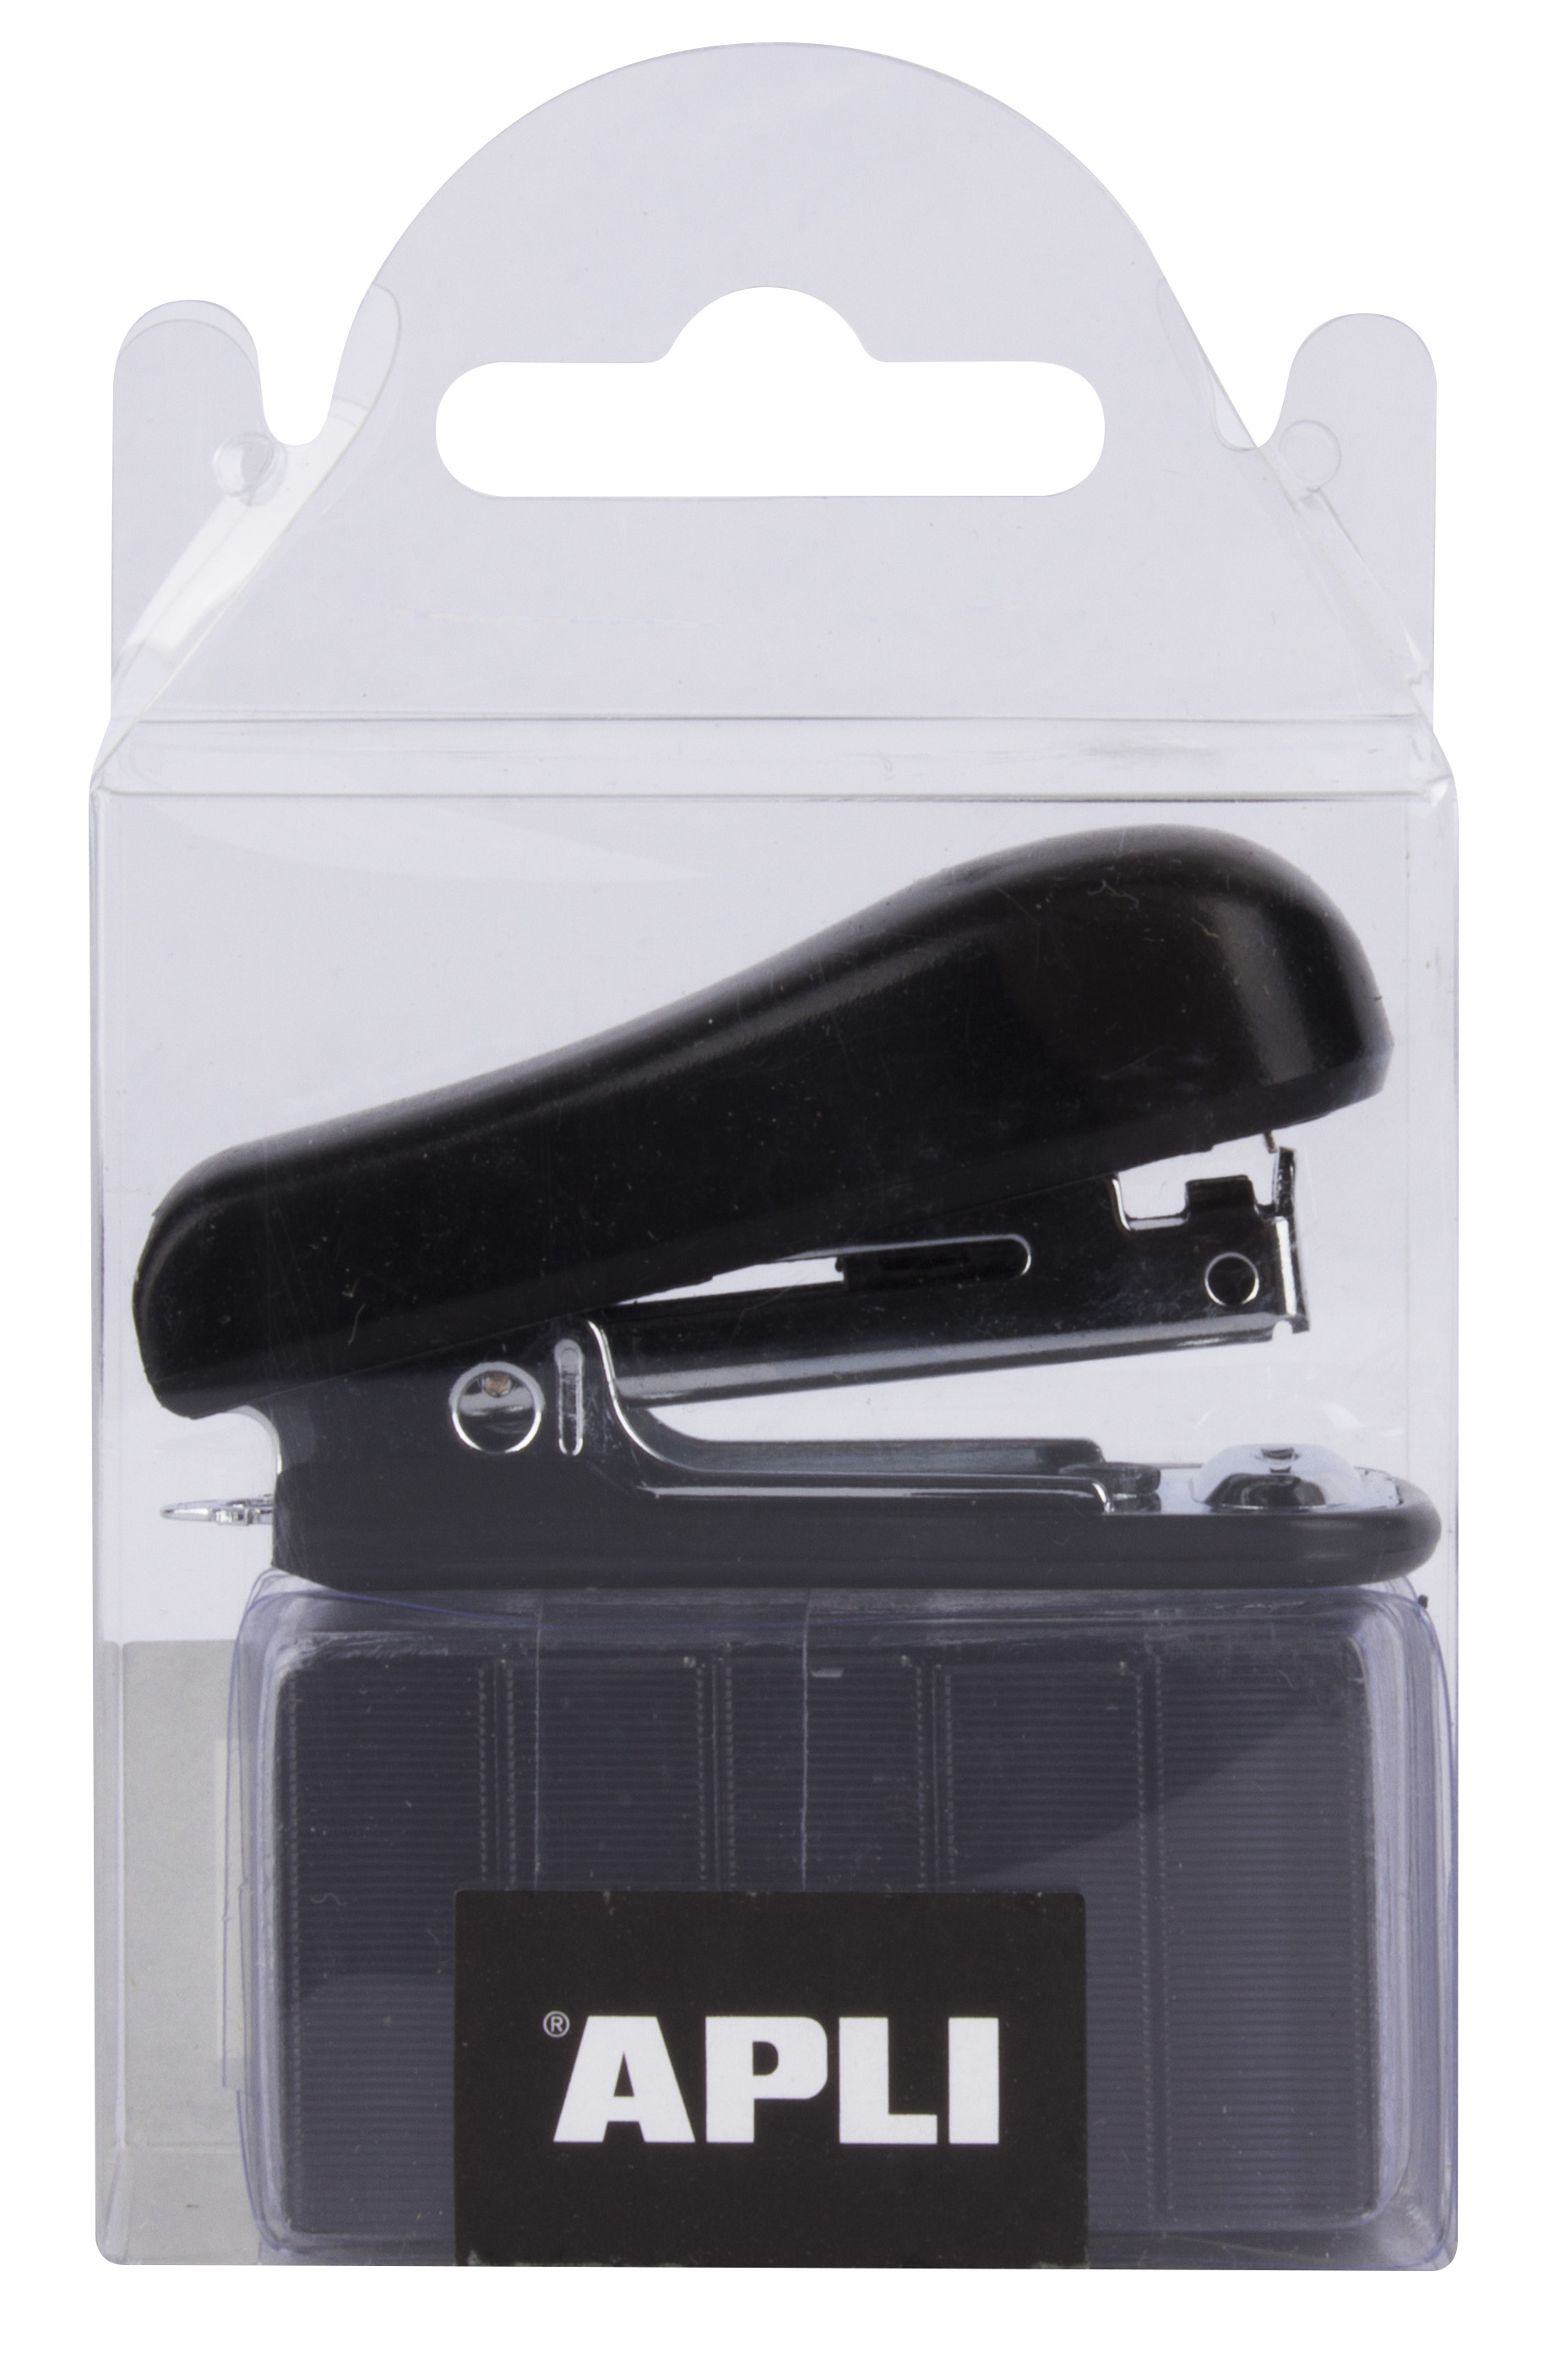 Apli Grapadora Pocket Negra - Tamao de 56mm para Grapas Nº10 - Capacidad de Unir hasta 20 Hojas de Papel - Diseo Compacto y Ligero - Contiene 1 Grapadora y 2000 Grapas del mismo Color que la Grapadora